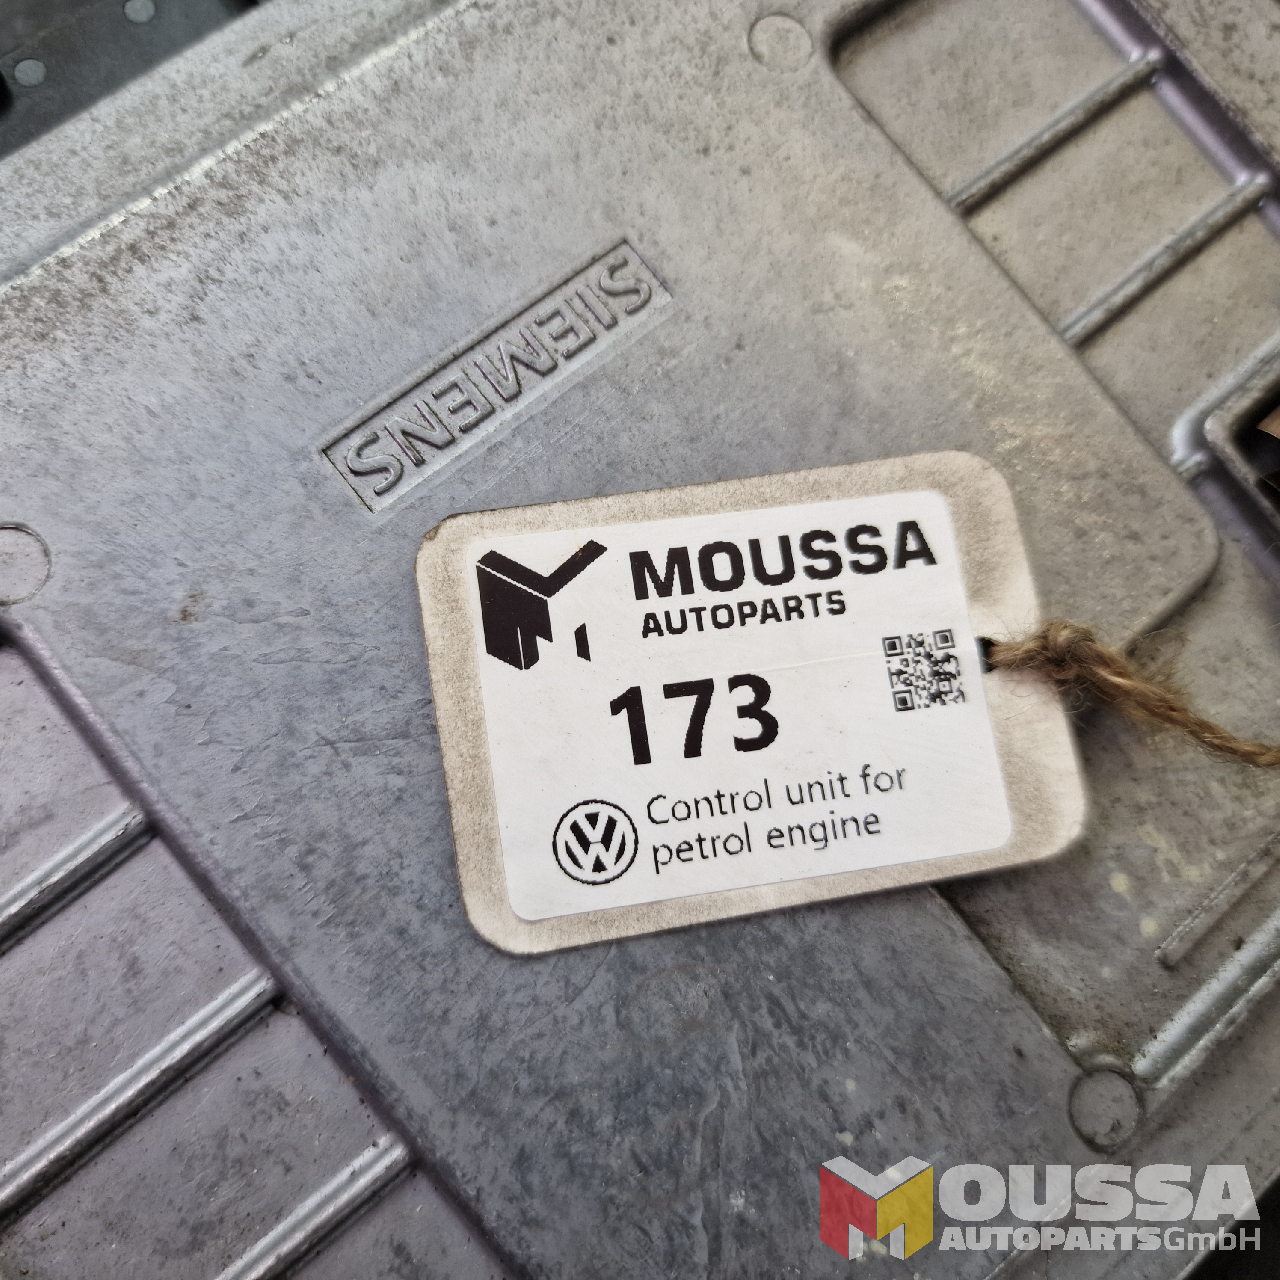 MOUSSA-AUTOPARTS-649bb3b06480a.jpg